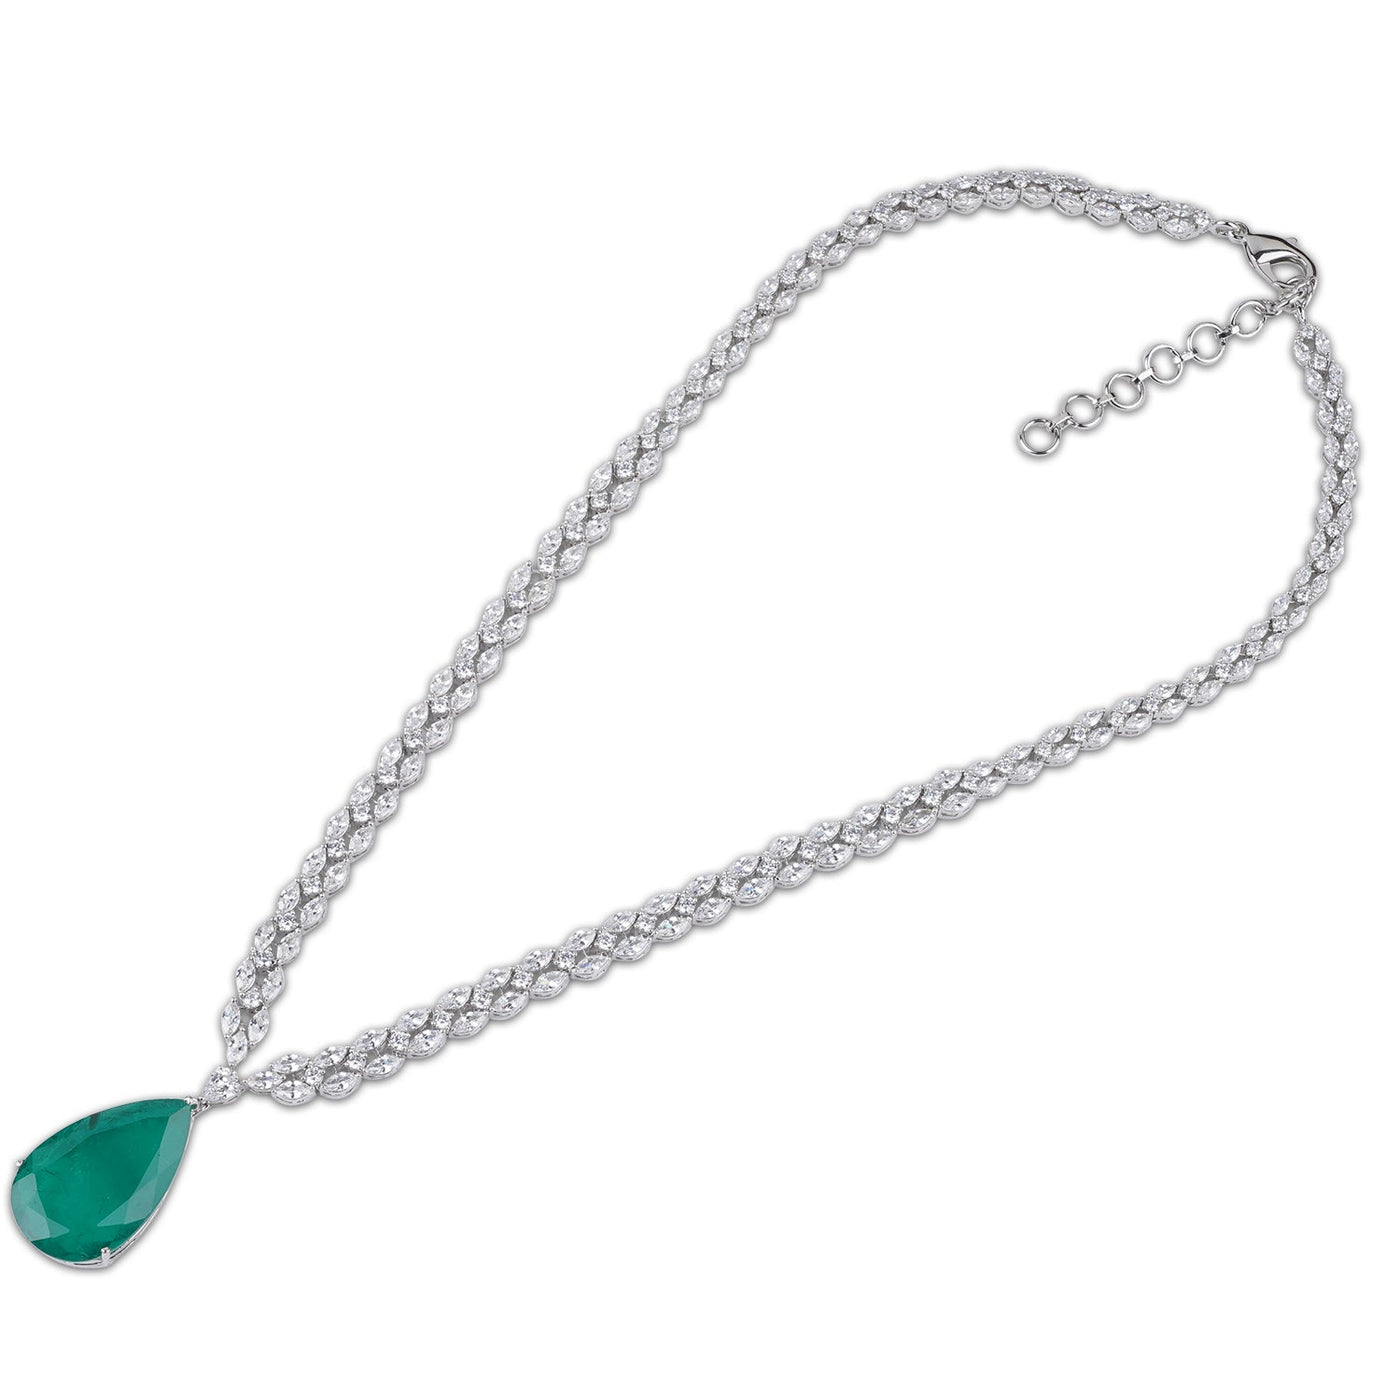  Emerald Green Single Stone Necklace Set